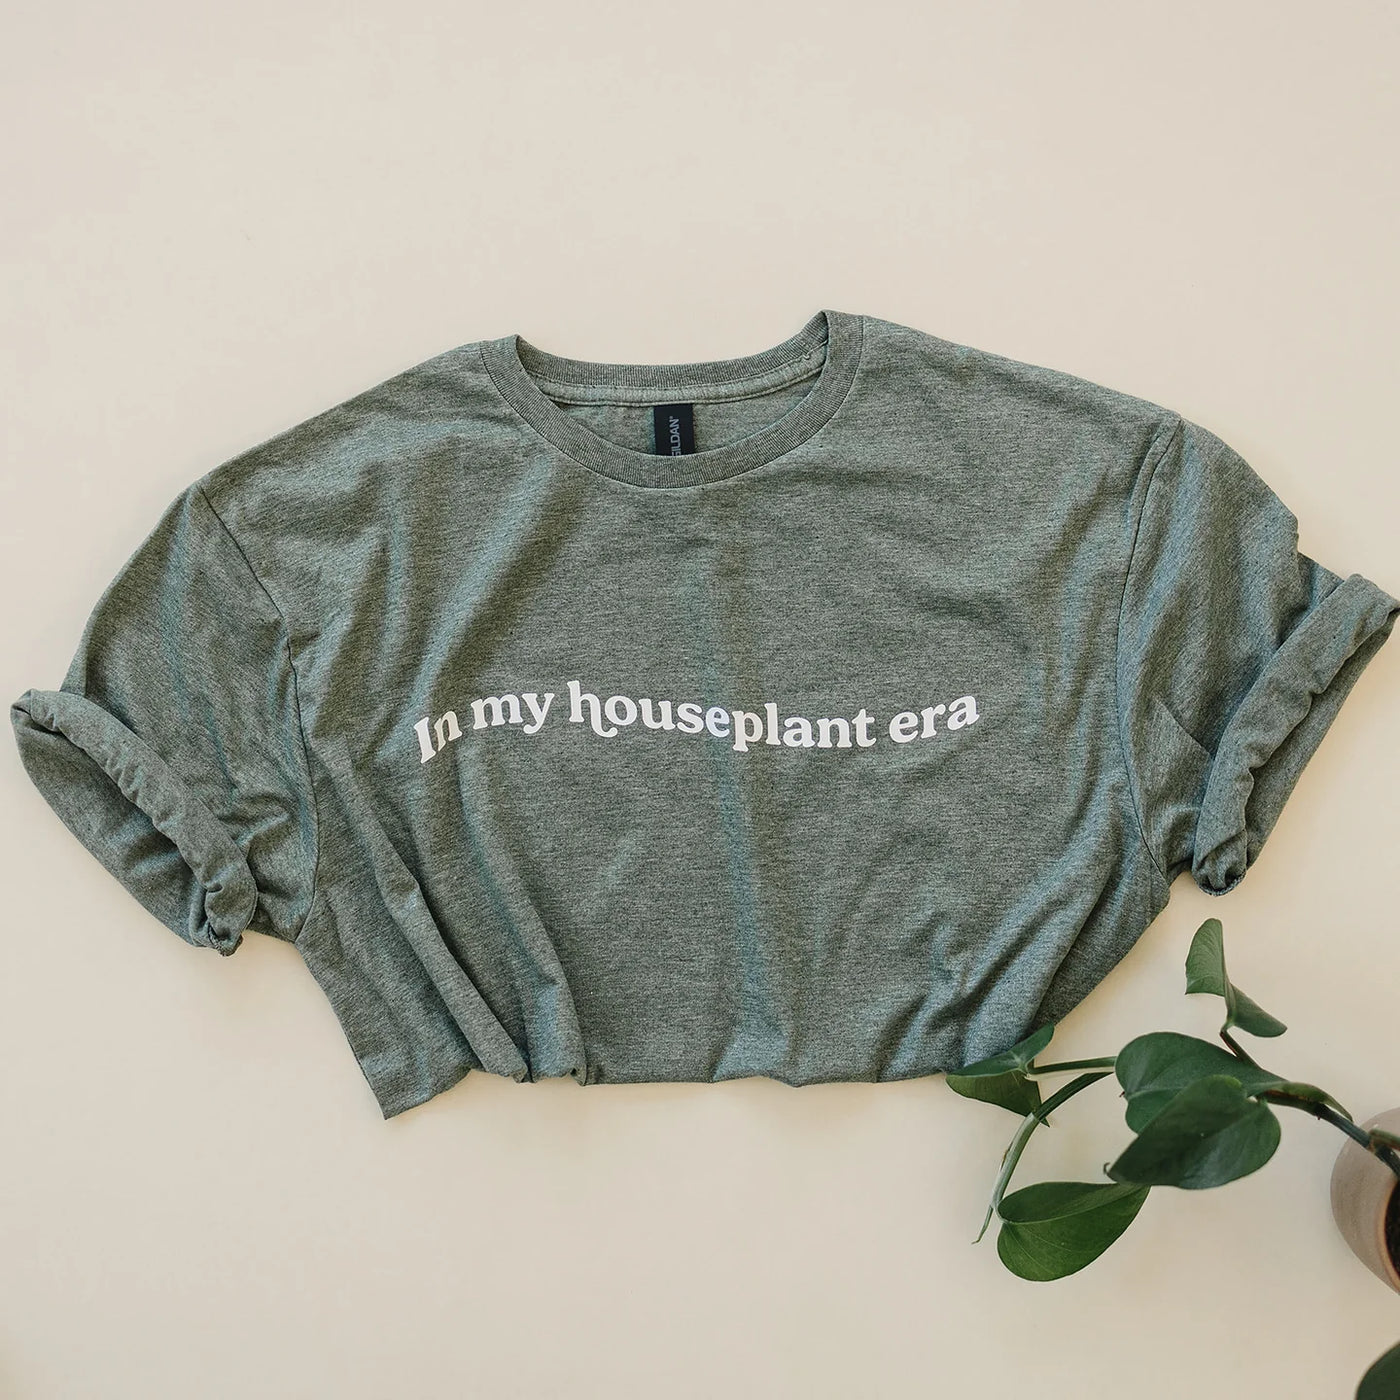 Houseplant Era Graphic T-Shirt - Black